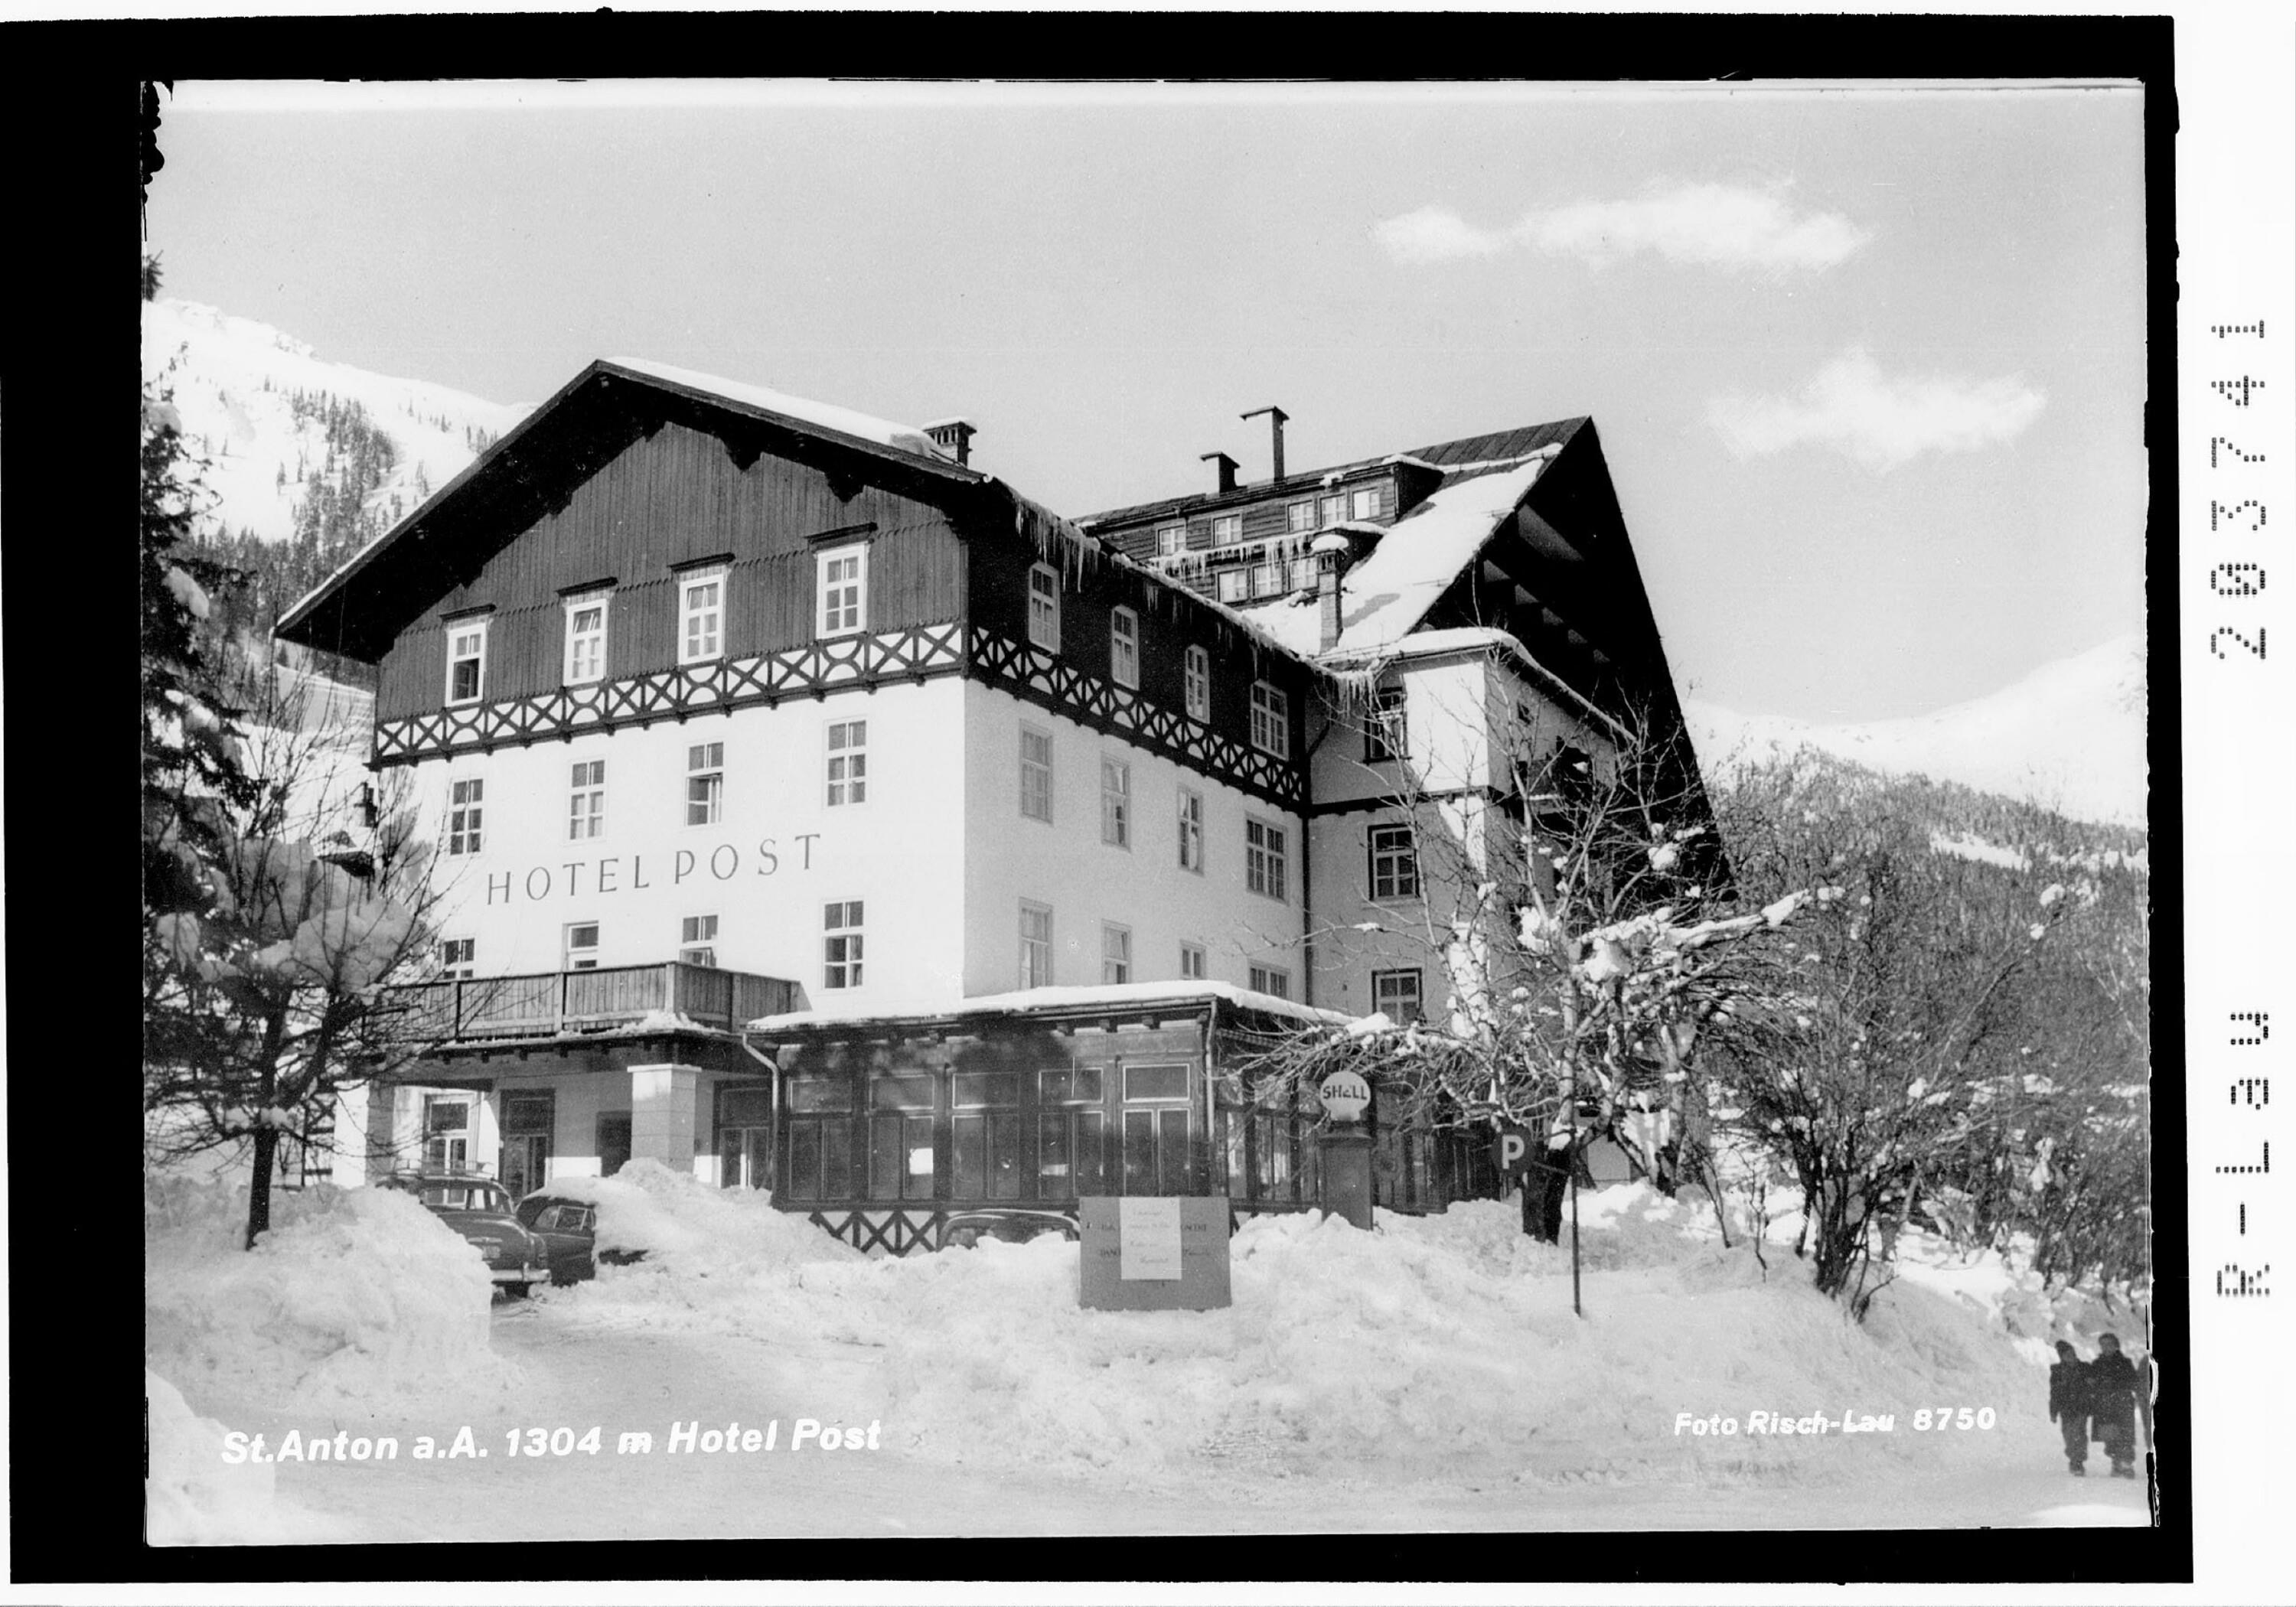 St.Anton am Arlberg 1304 m Hotel Post></div>


    <hr>
    <div class=